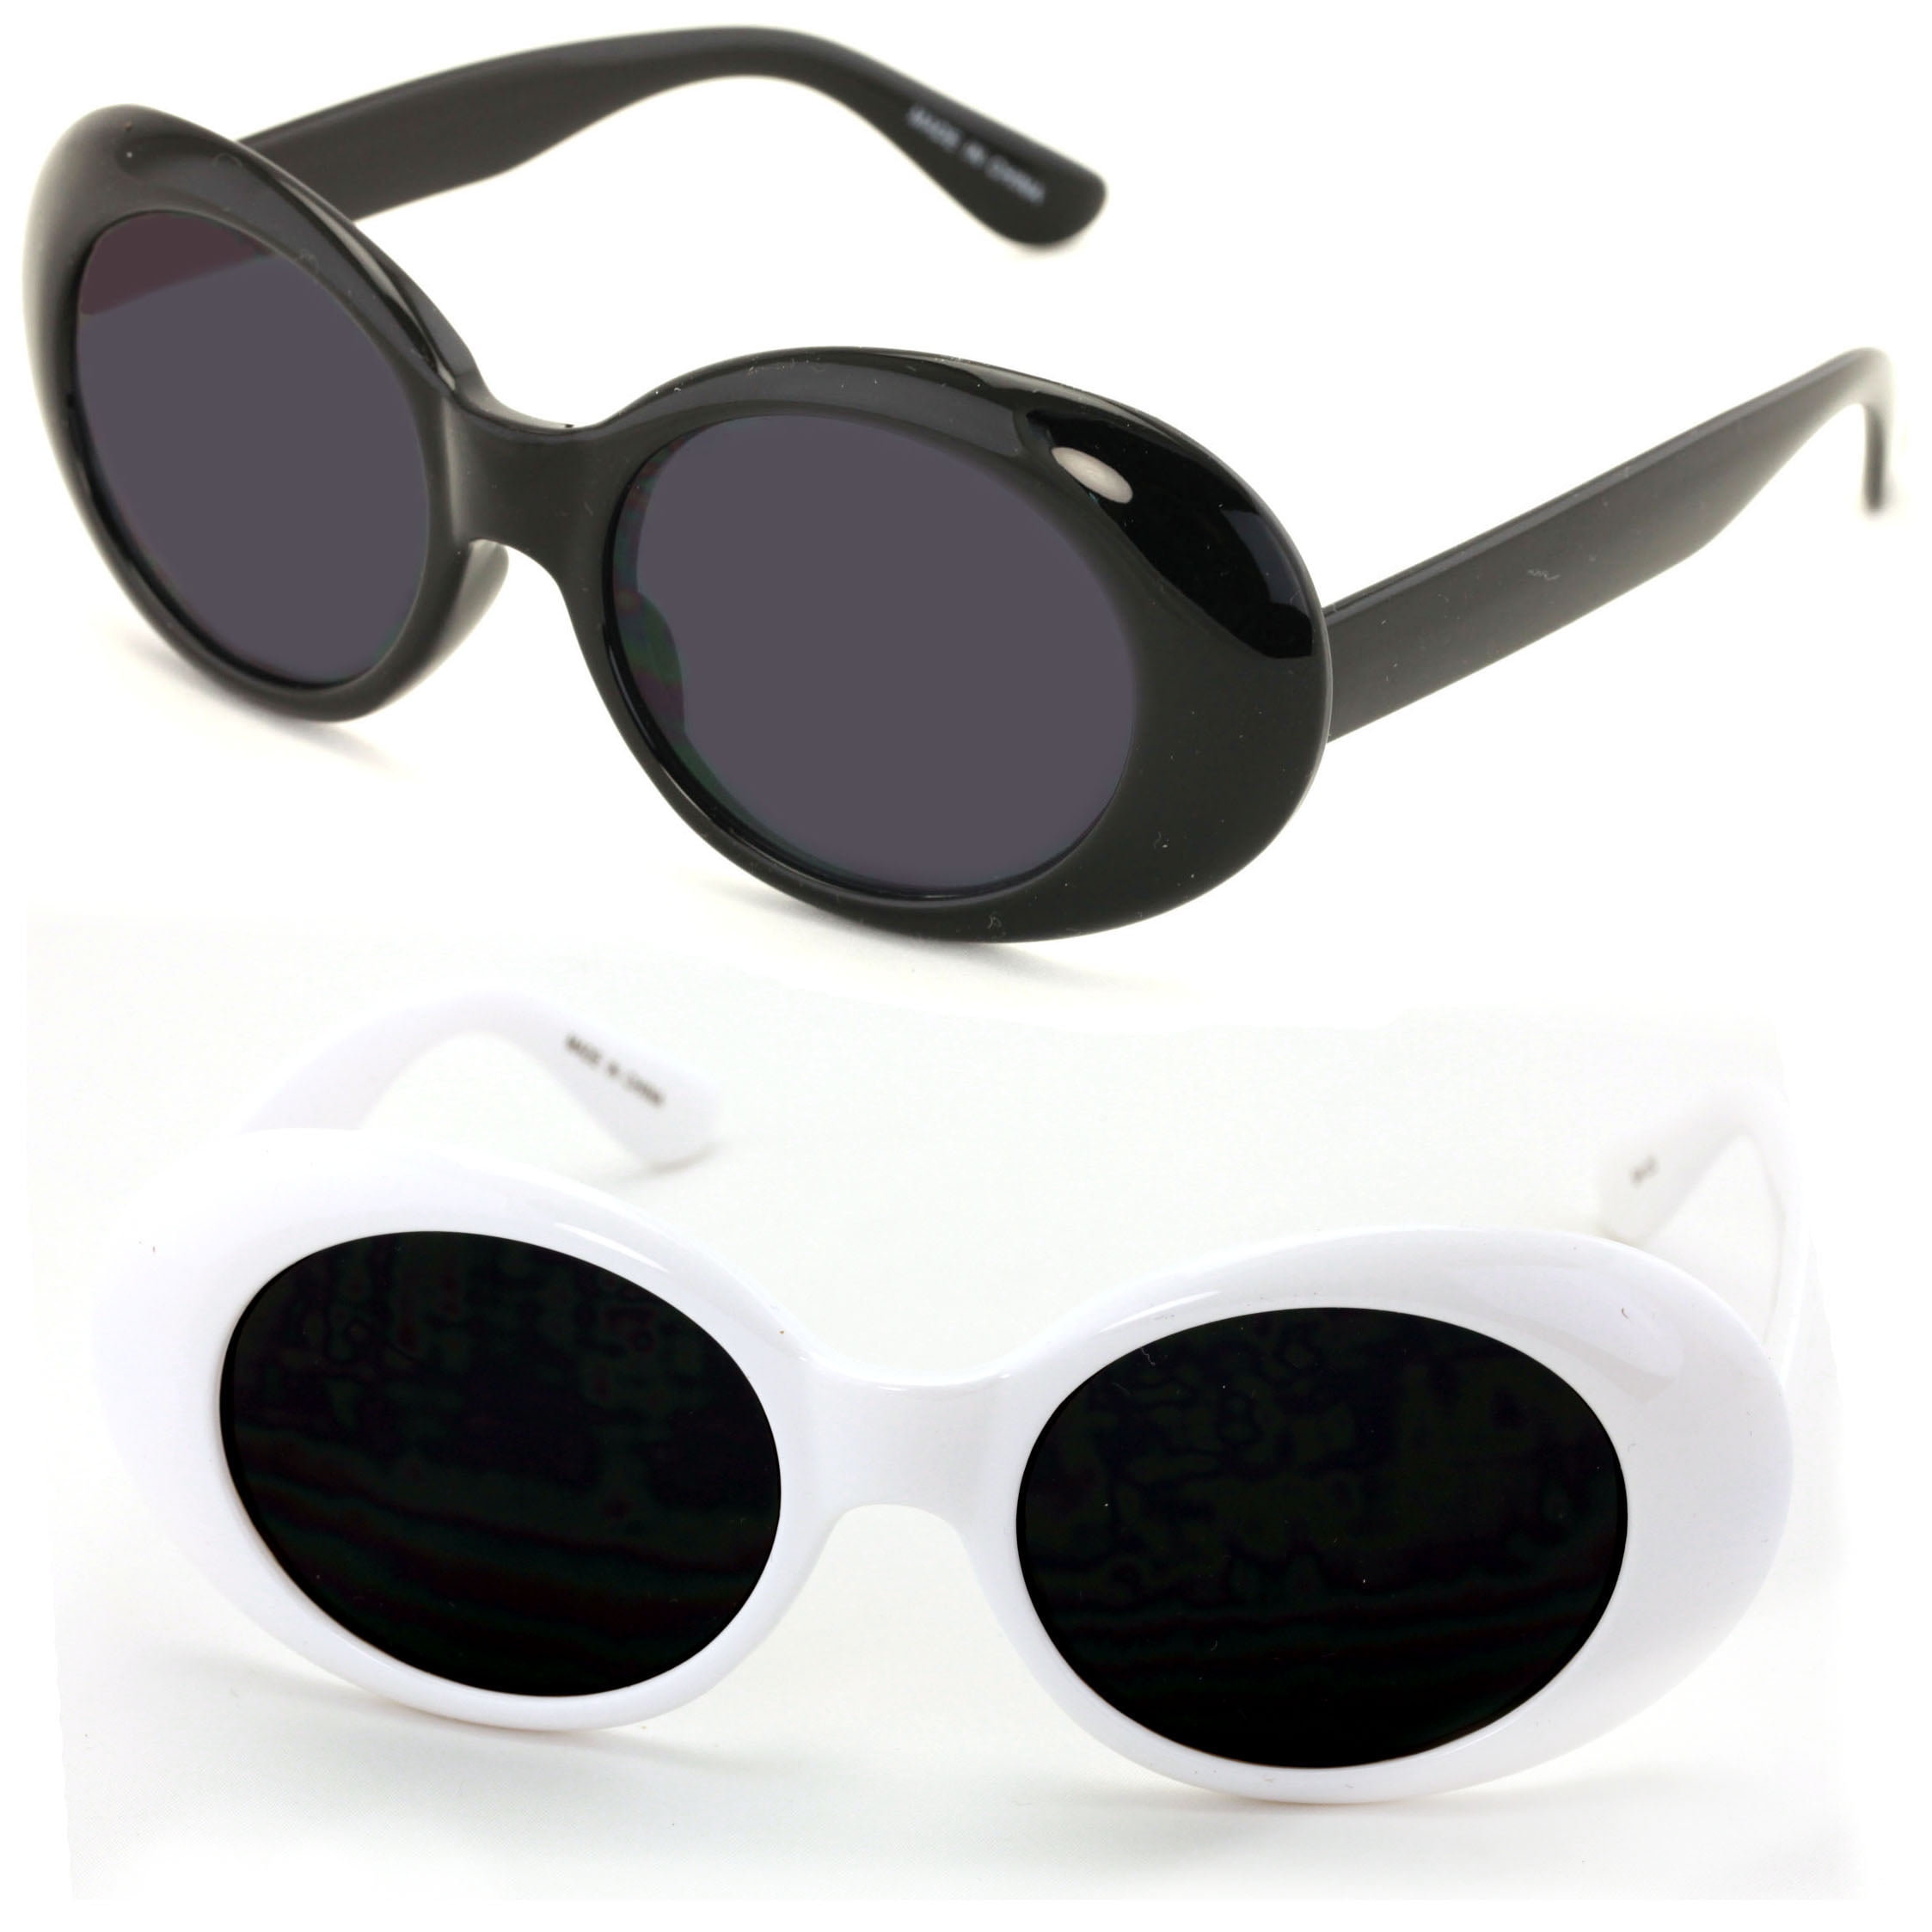 Fashion Oval Women Sunglasses Round Mirrored Lens Plastic Retro Frame Shades 